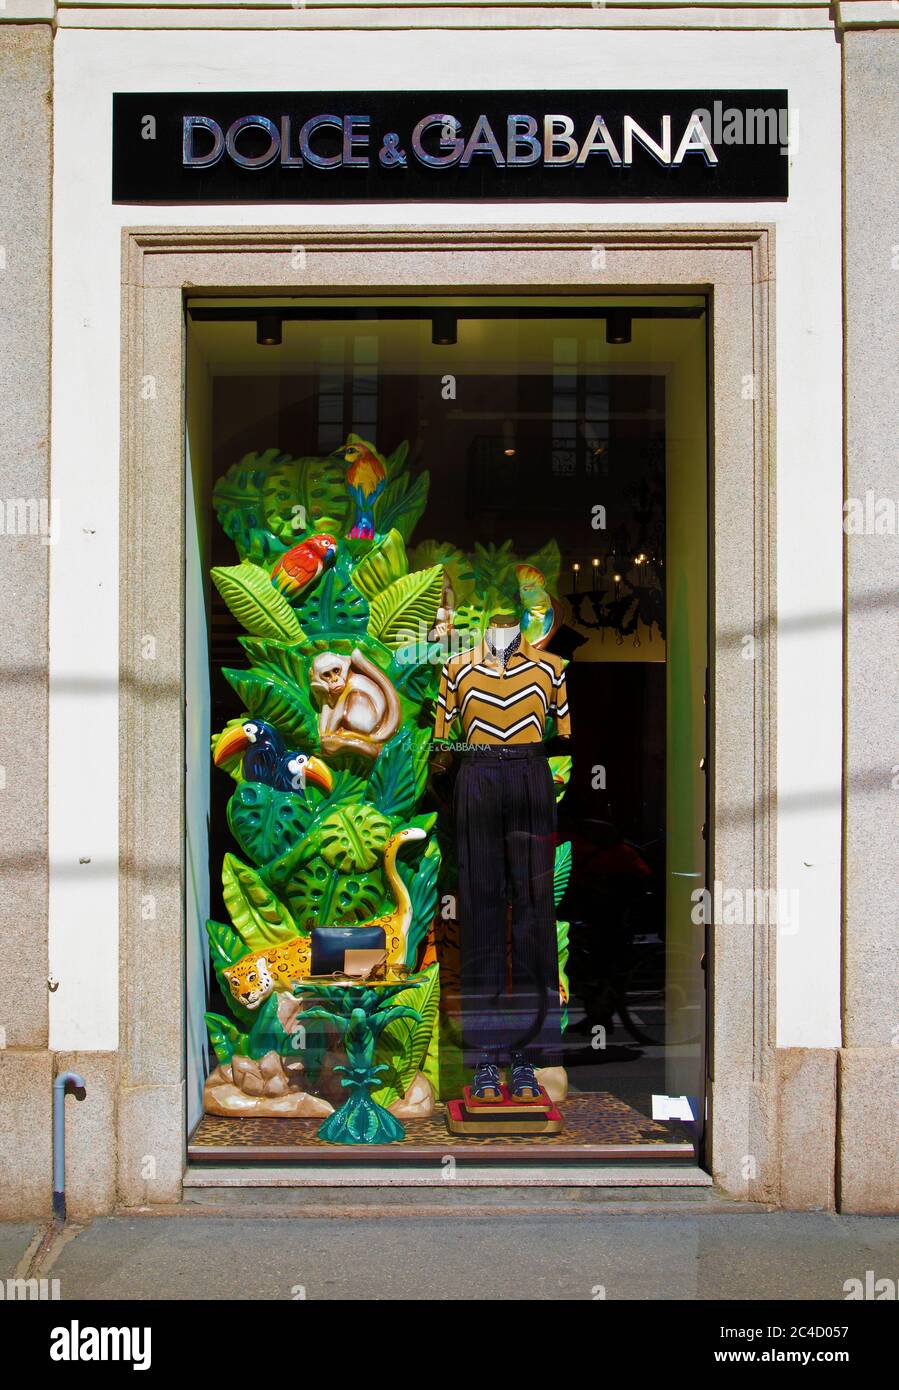 Dolce & Gabbana store, Milan – Italy